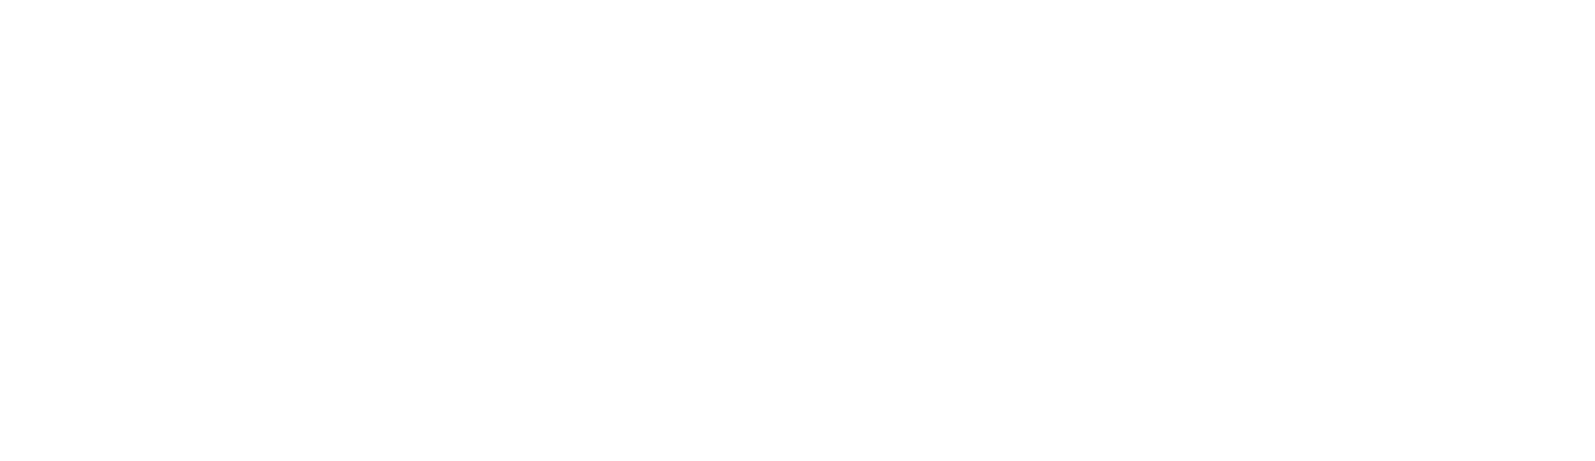 Knights Group logo grand pour les fonds sombres (PNG transparent)